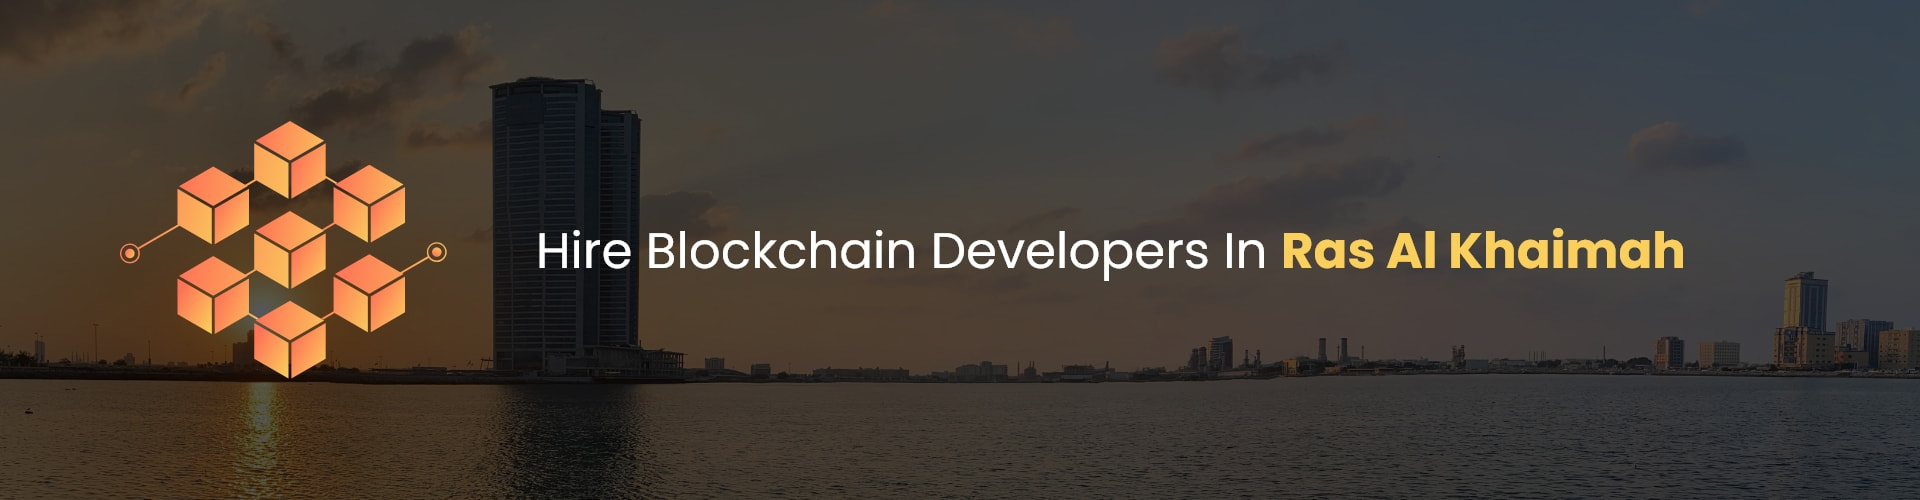 hire blockchain developers in ras al khaimah